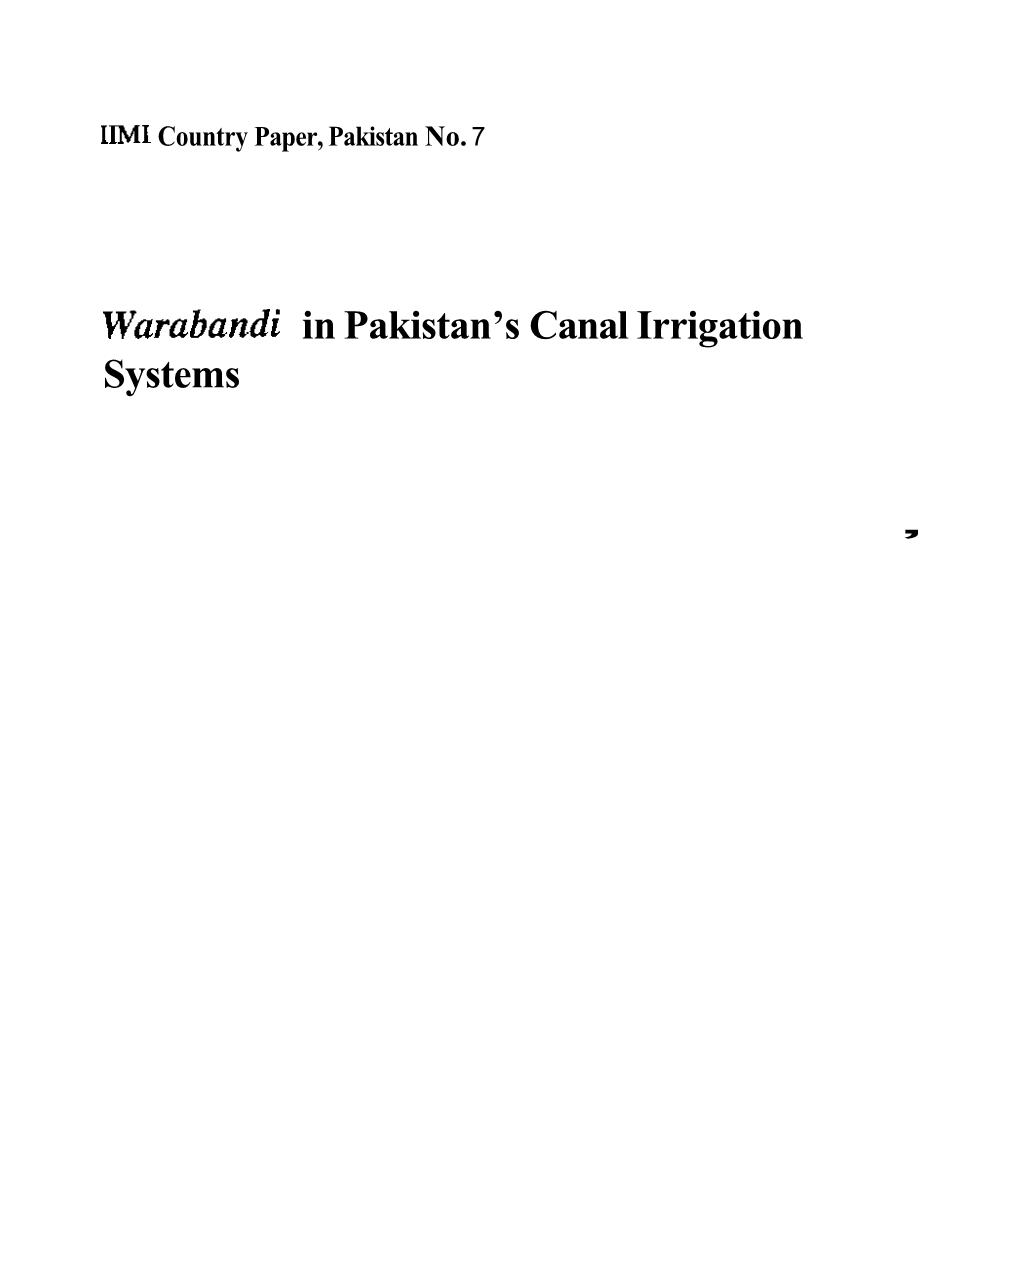 Wurubundi in Pakistan's Canal Irrigation Systems